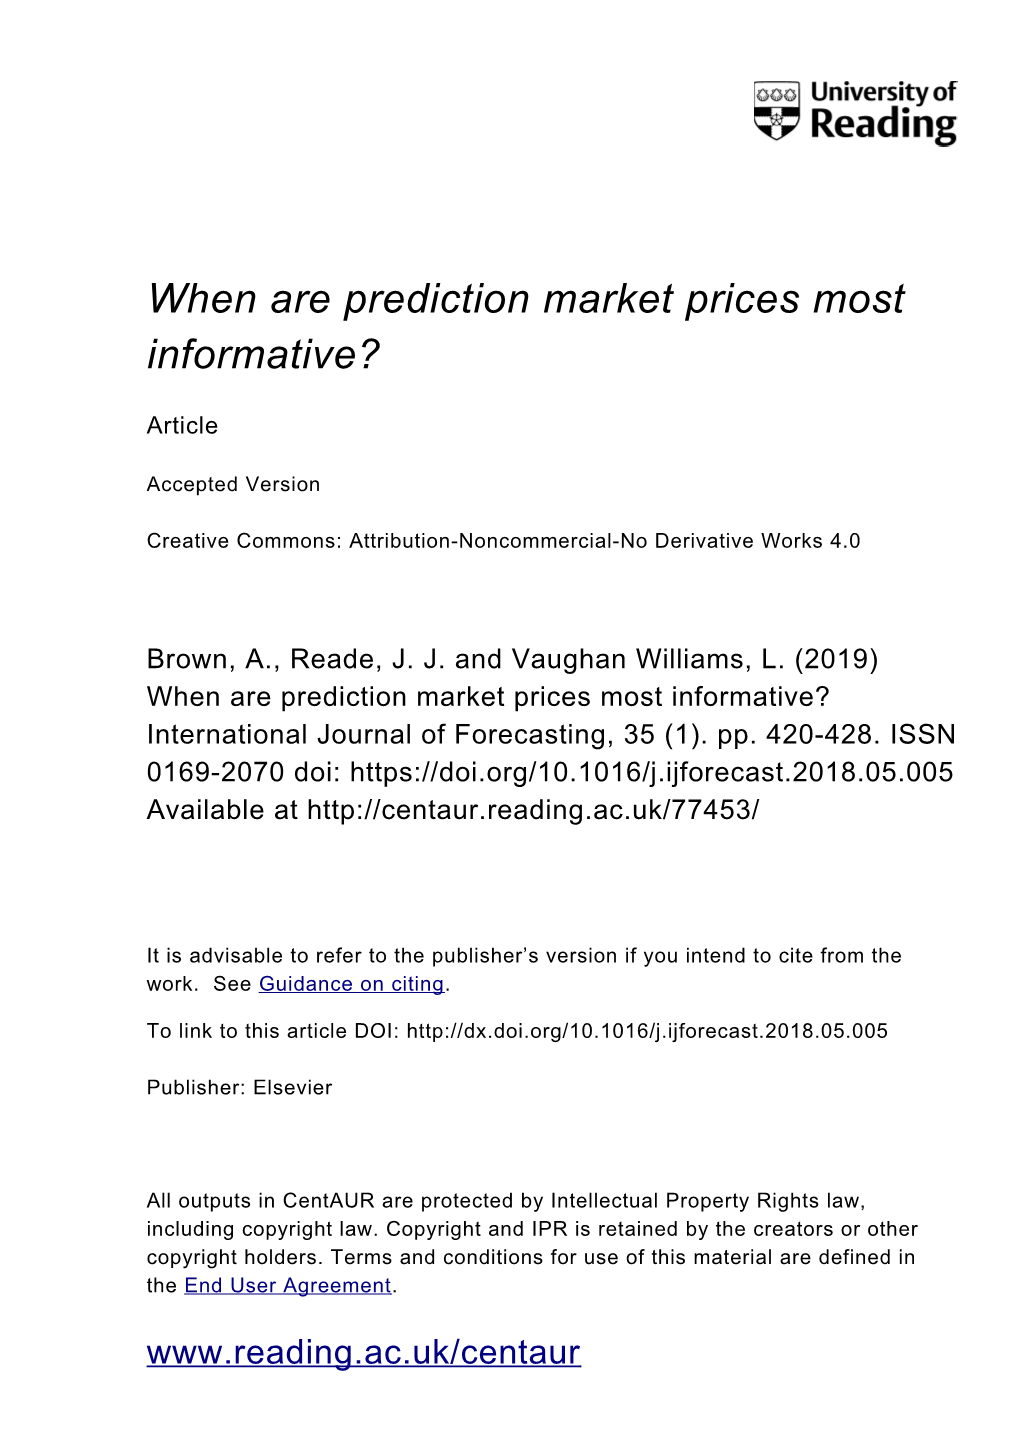 When Are Prediction Market Prices Most Informative?